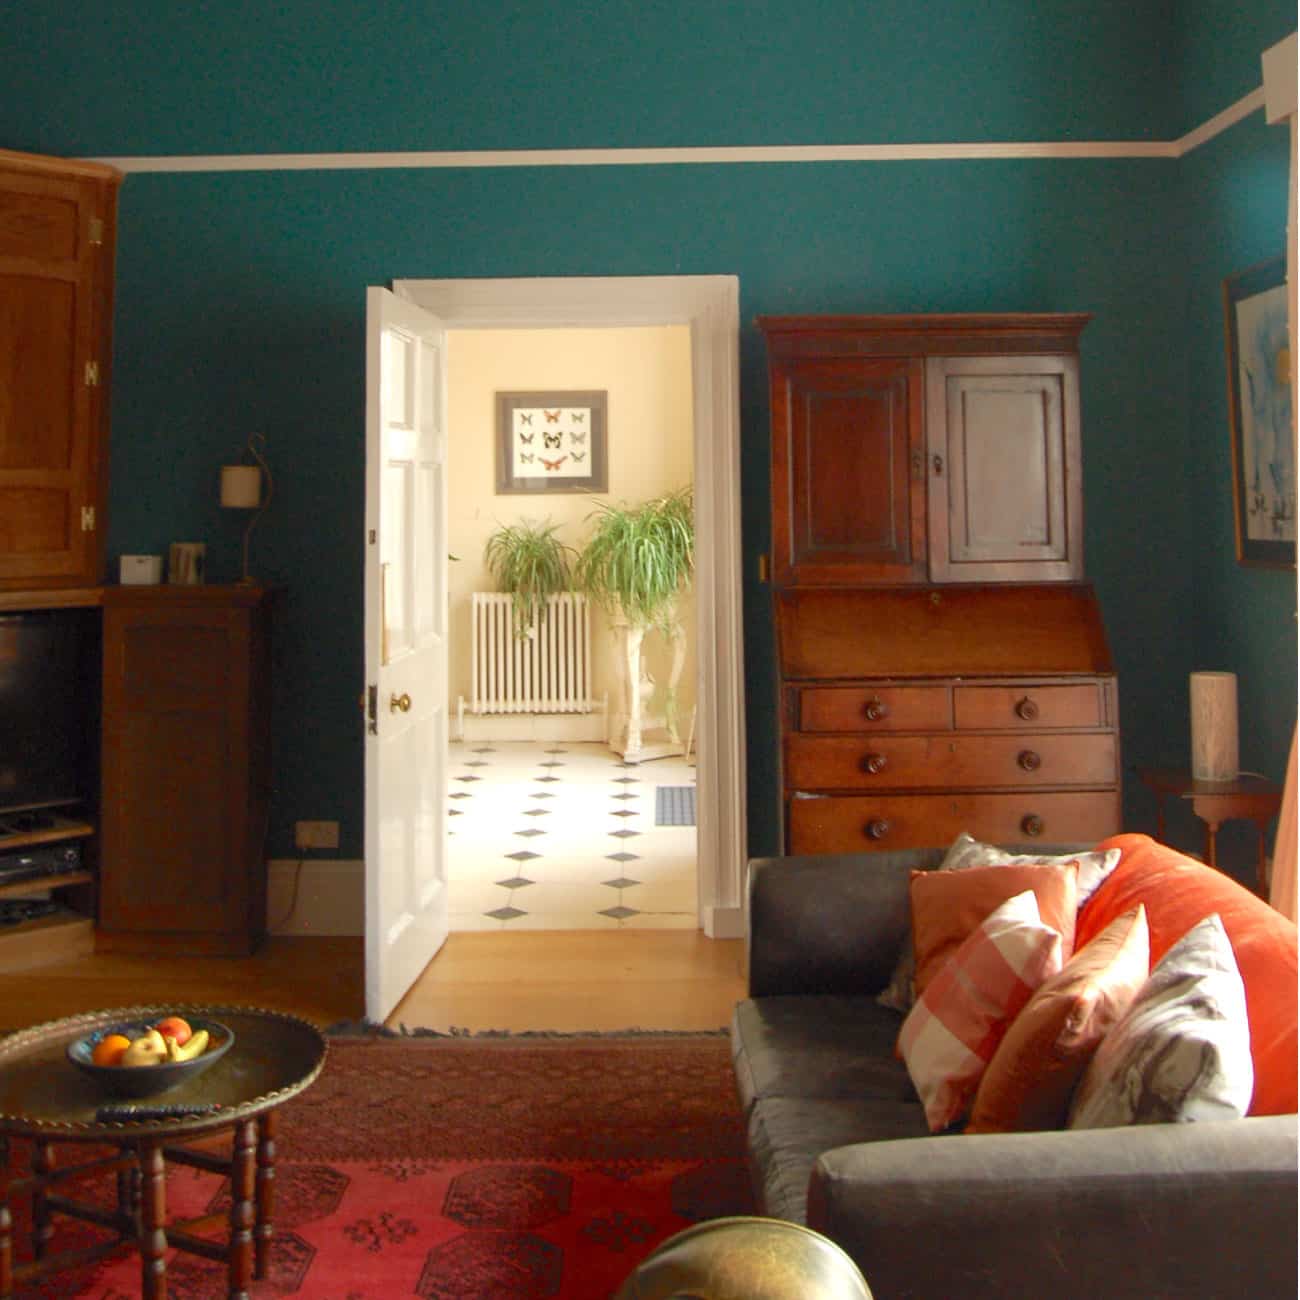 vardo farrow and ball paint sitting room design in warwickshire